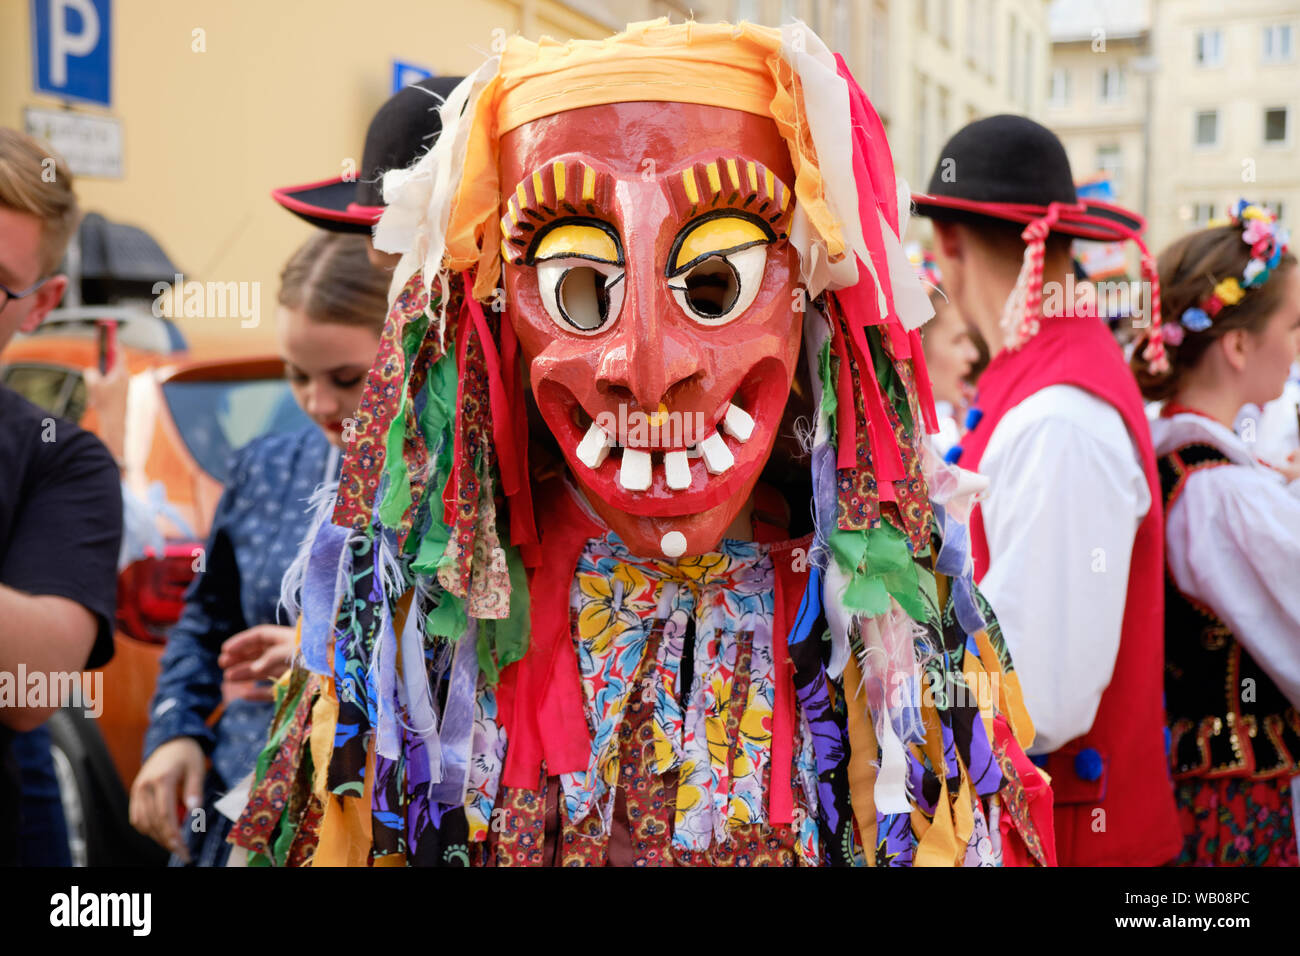 Portrait of Polish Folklore costume and mask devilish performer start of the Parade of Etnovyr Festival in street of Lviv. Lviv, Ukraine - August 2019 Stock Photo